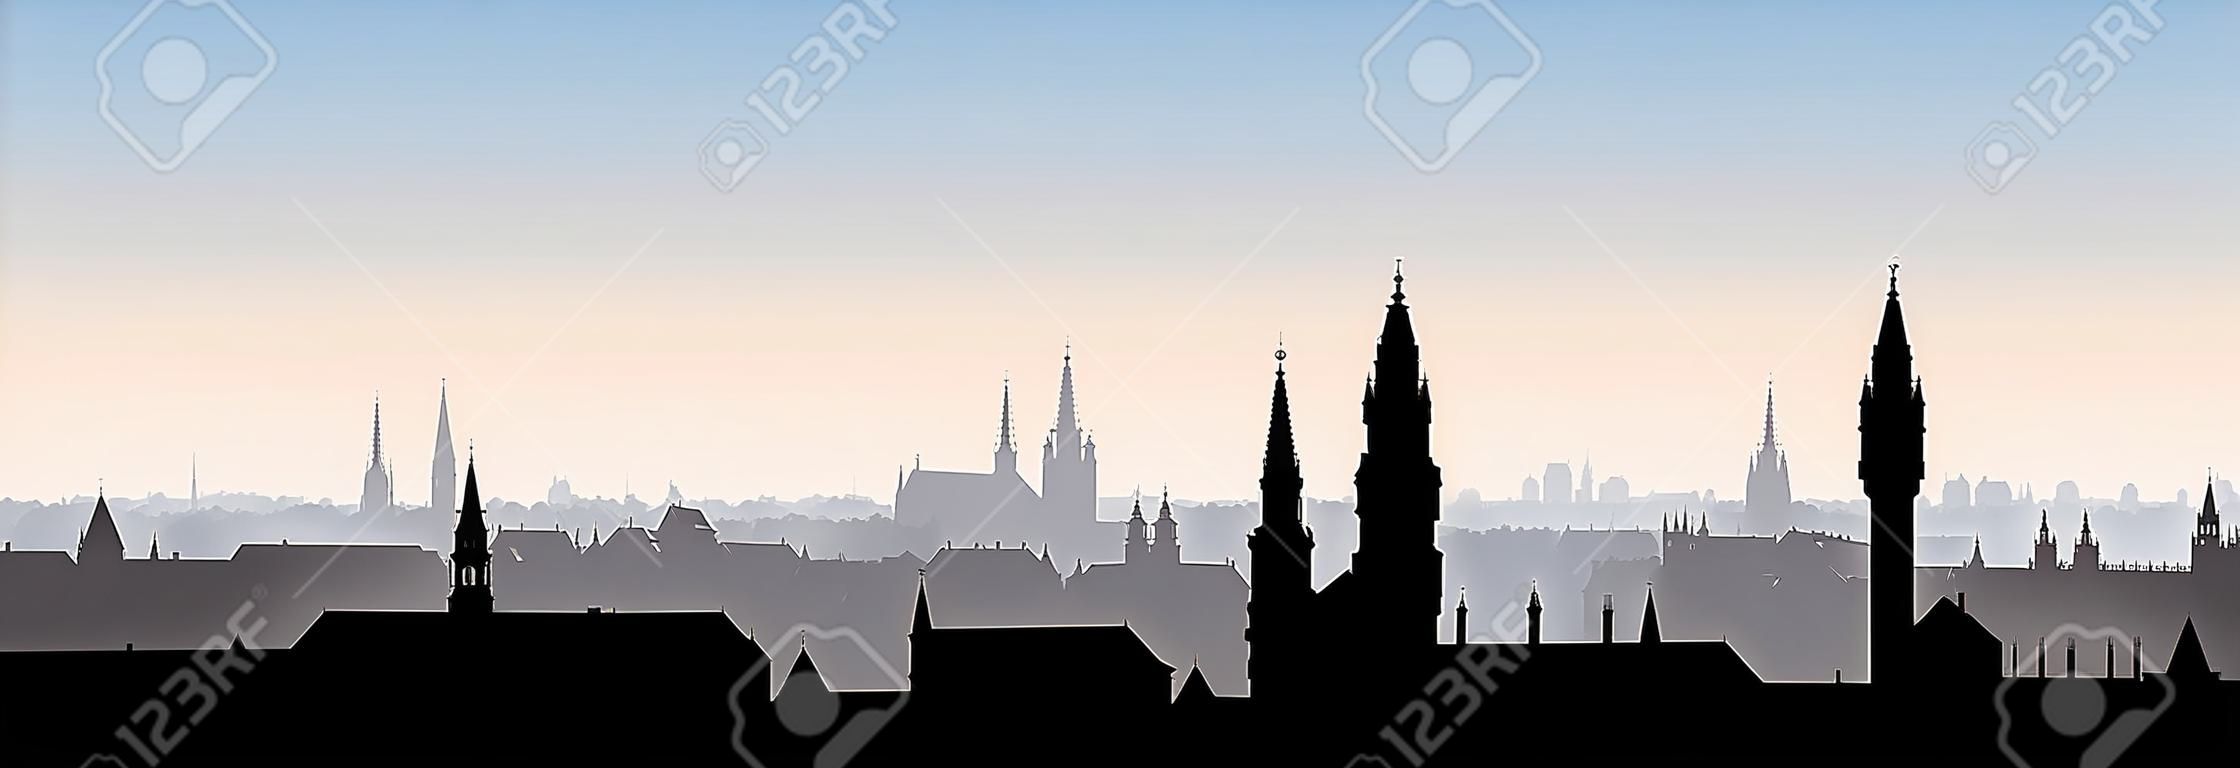 Munich city, Germany. Urban panoramic cityscape. Landmark buildings silhouette skyline. Travel Bavaria background